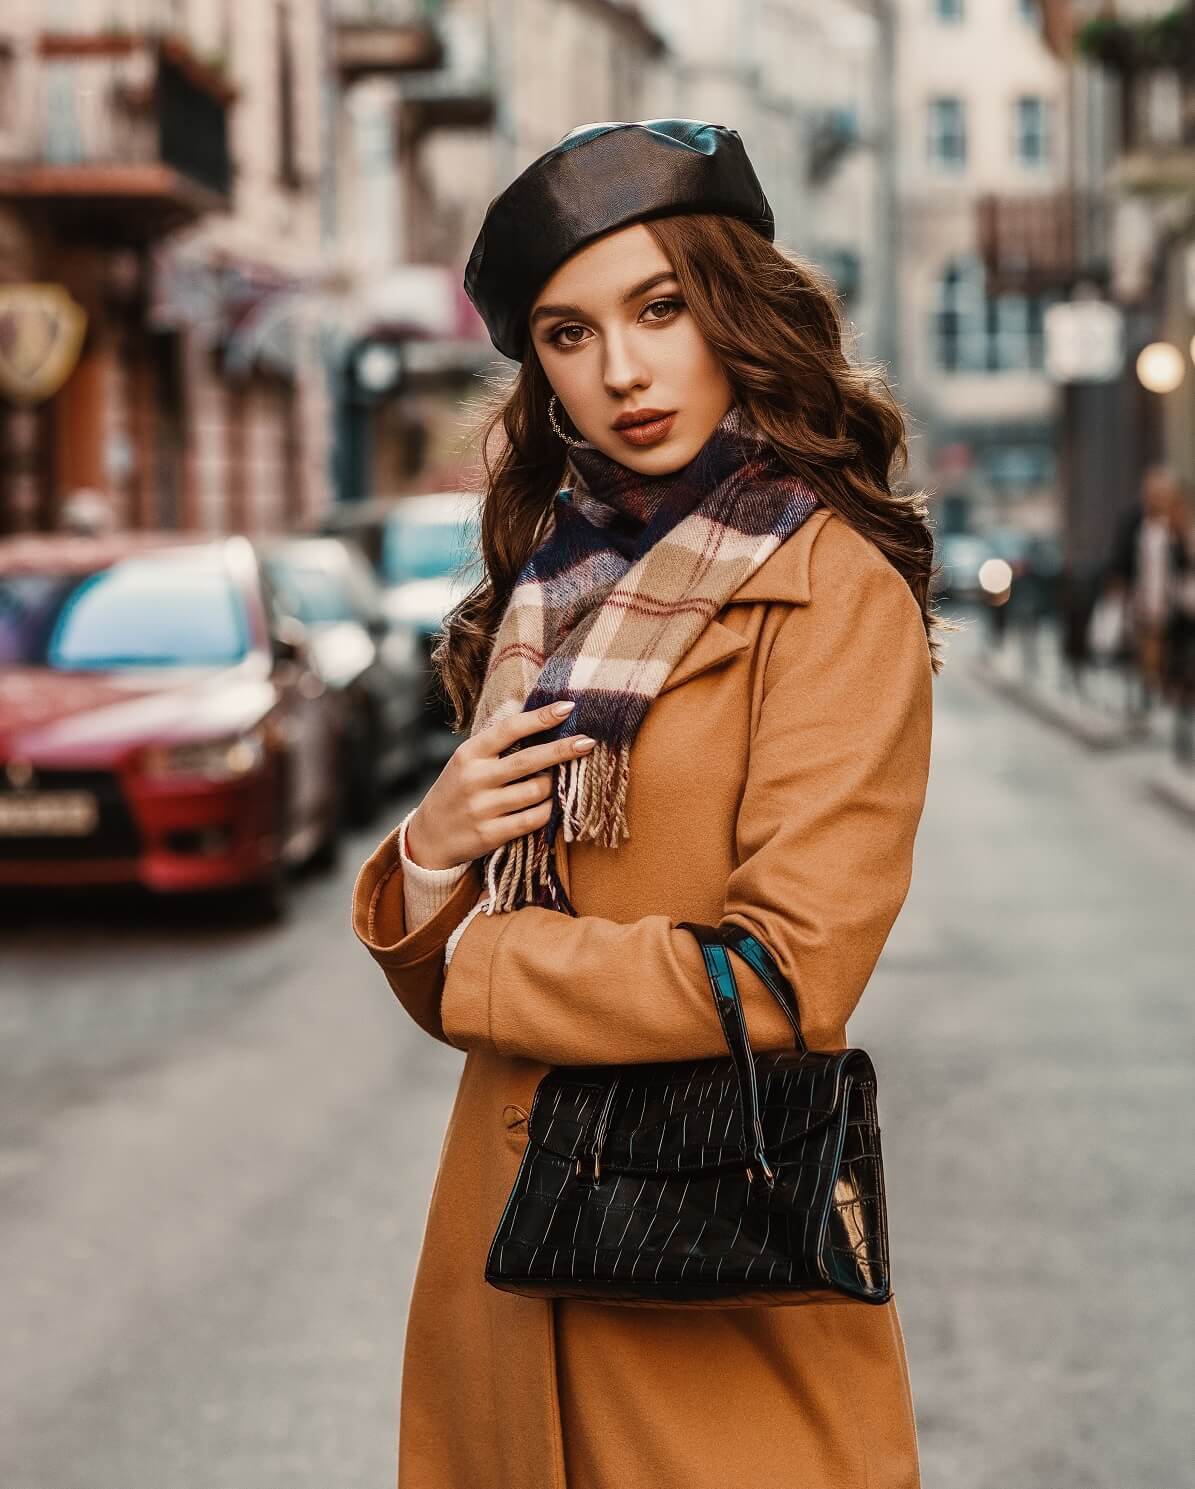 woman holding purse consumer fashion